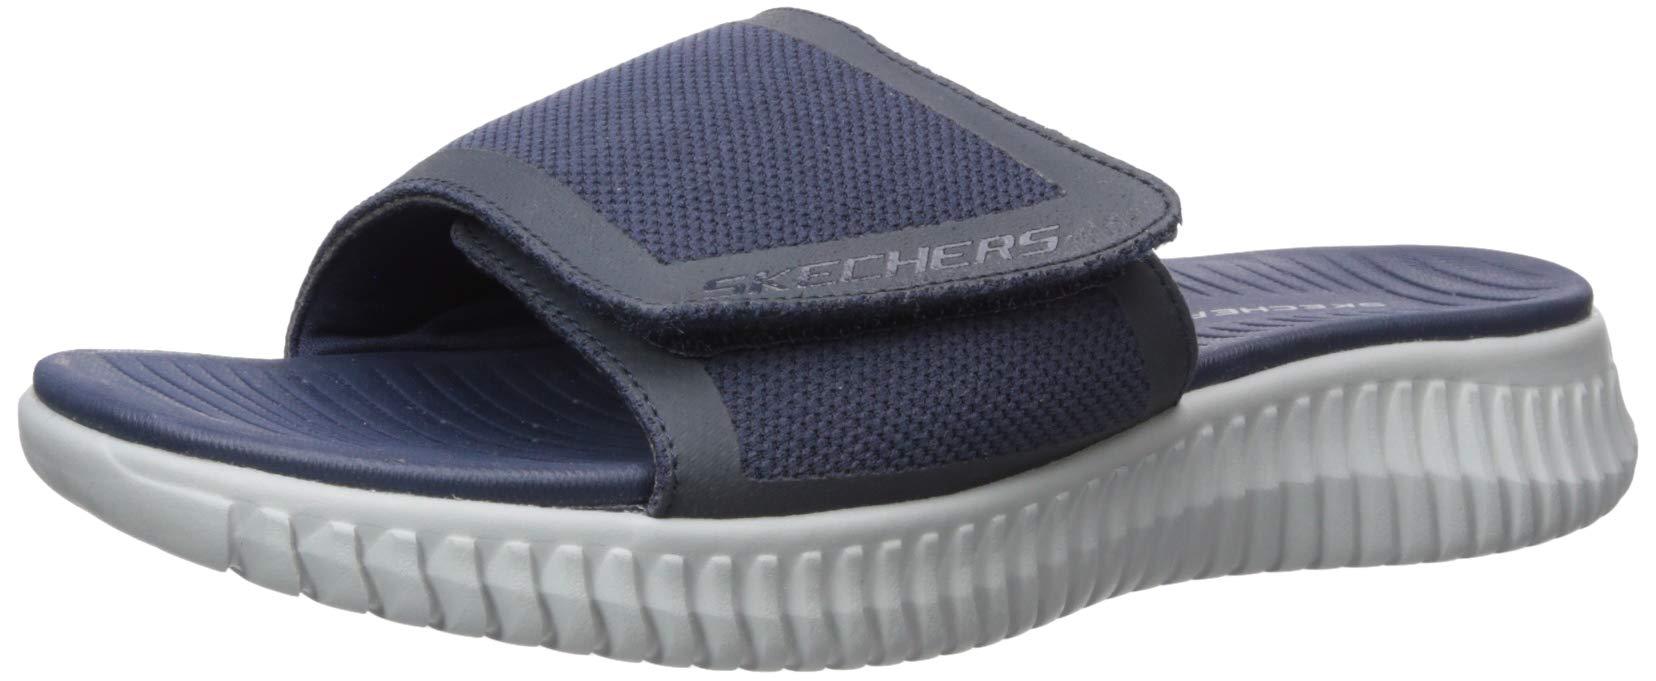 skechers shore slide sandals